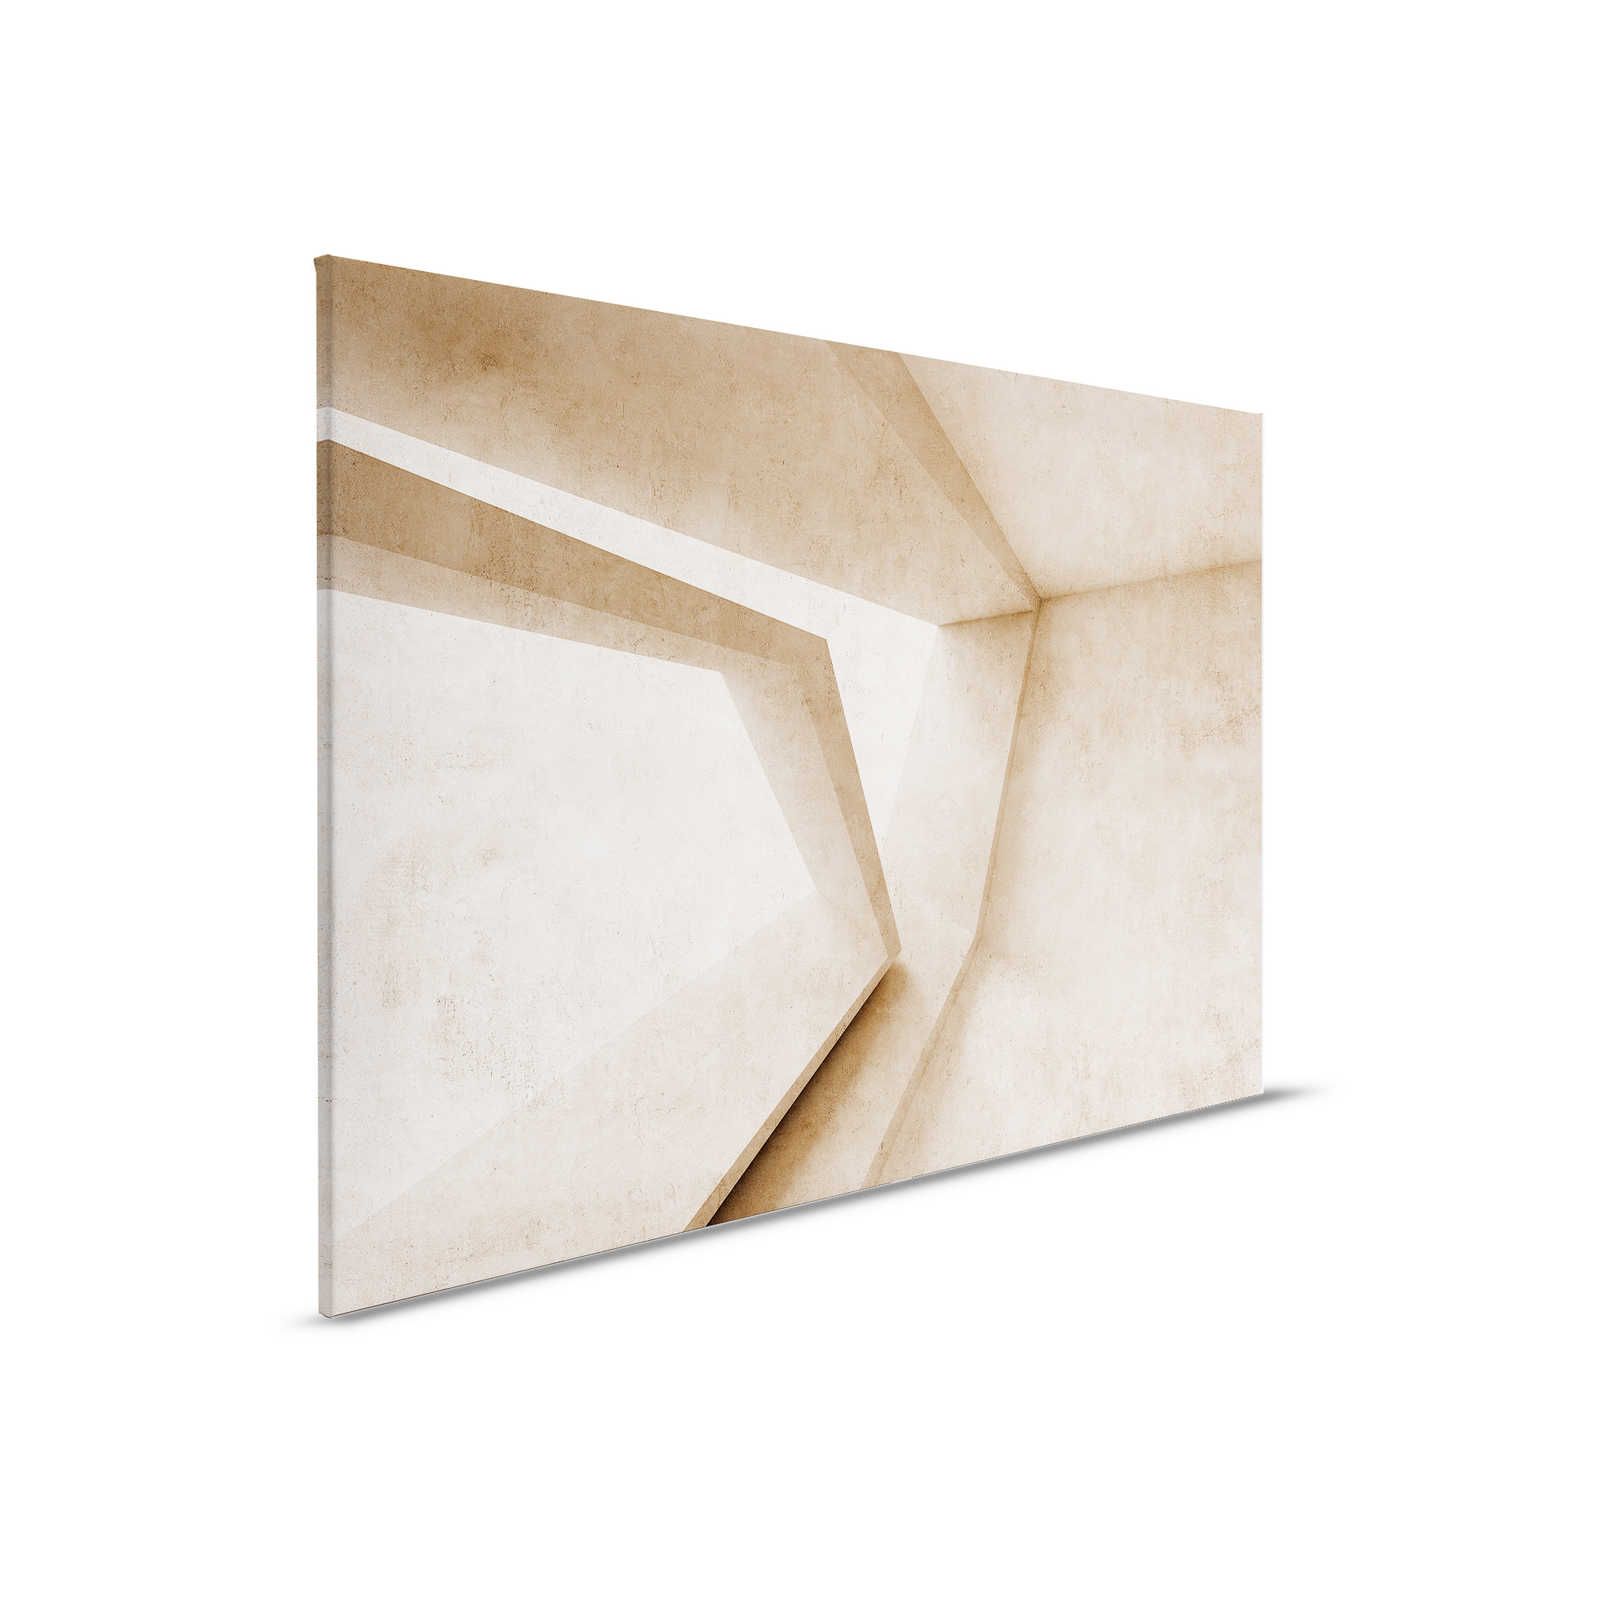         Futura 1 - Beton Leinwandbild 3D Muster – 0,90 m x 0,60 m
    